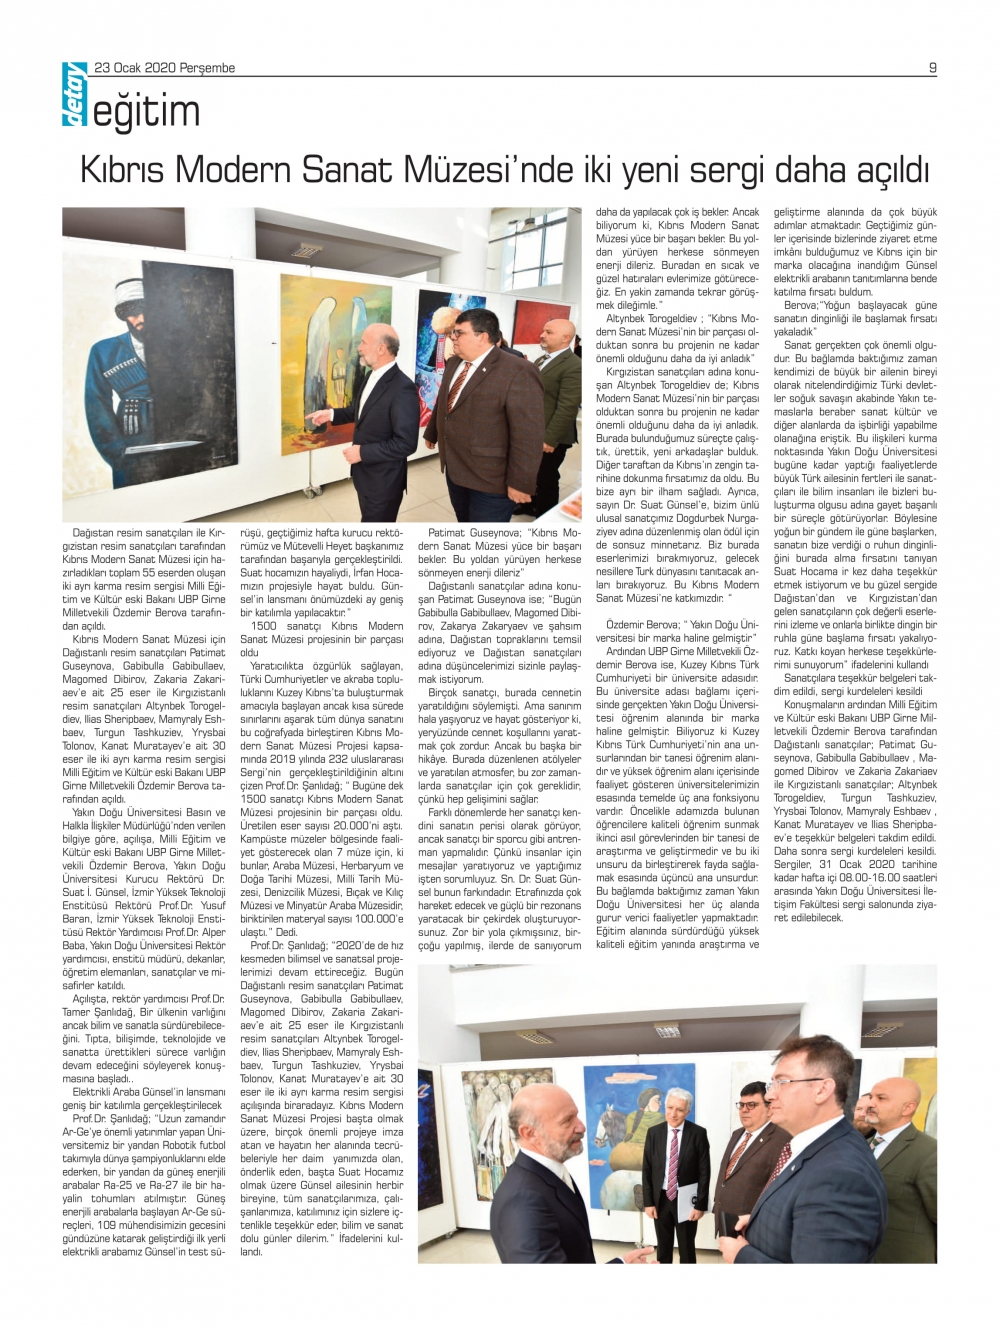 Detay Gazetes 23 Ocak 2020 galerisi resim 8